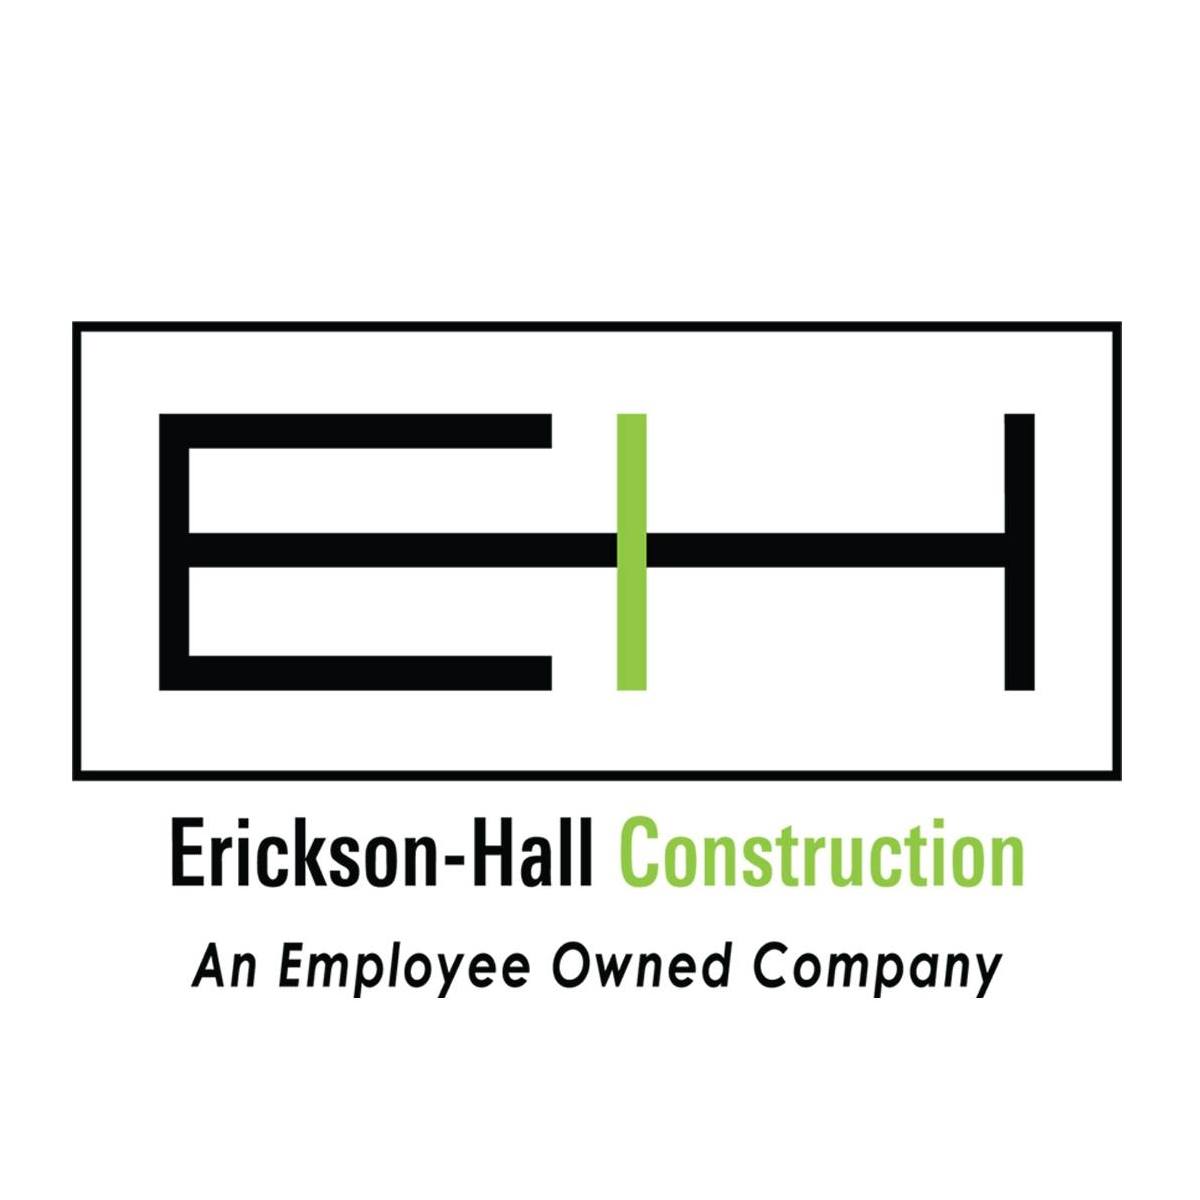 Erickson-Hall Construction